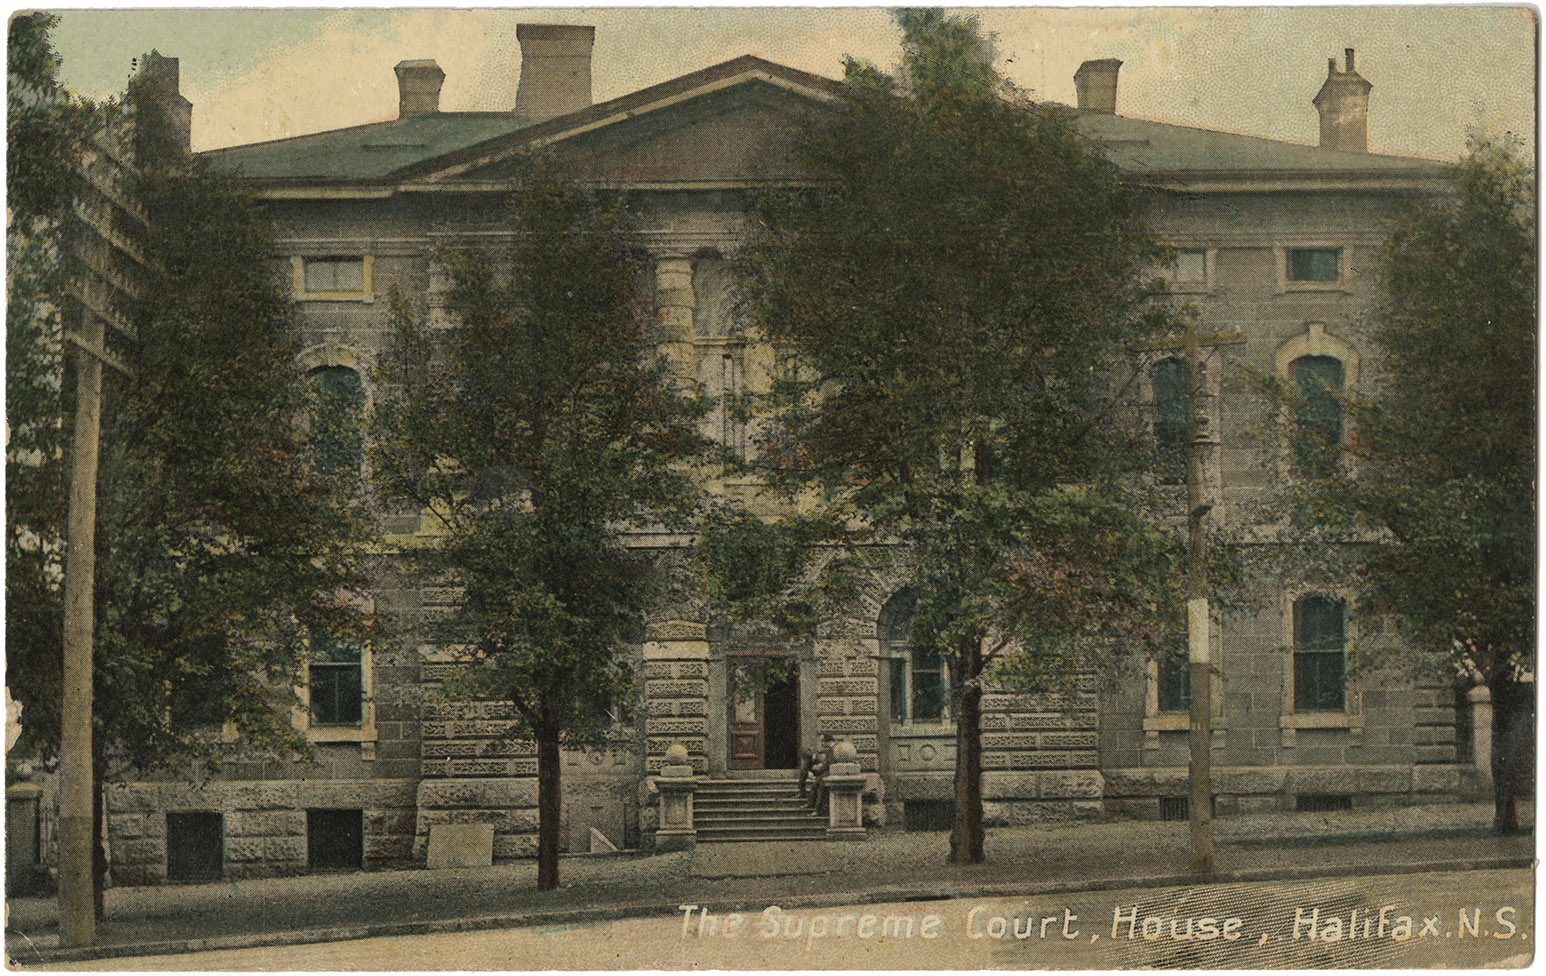 communityalbums - The Supreme Court House, Halifax, N.S.